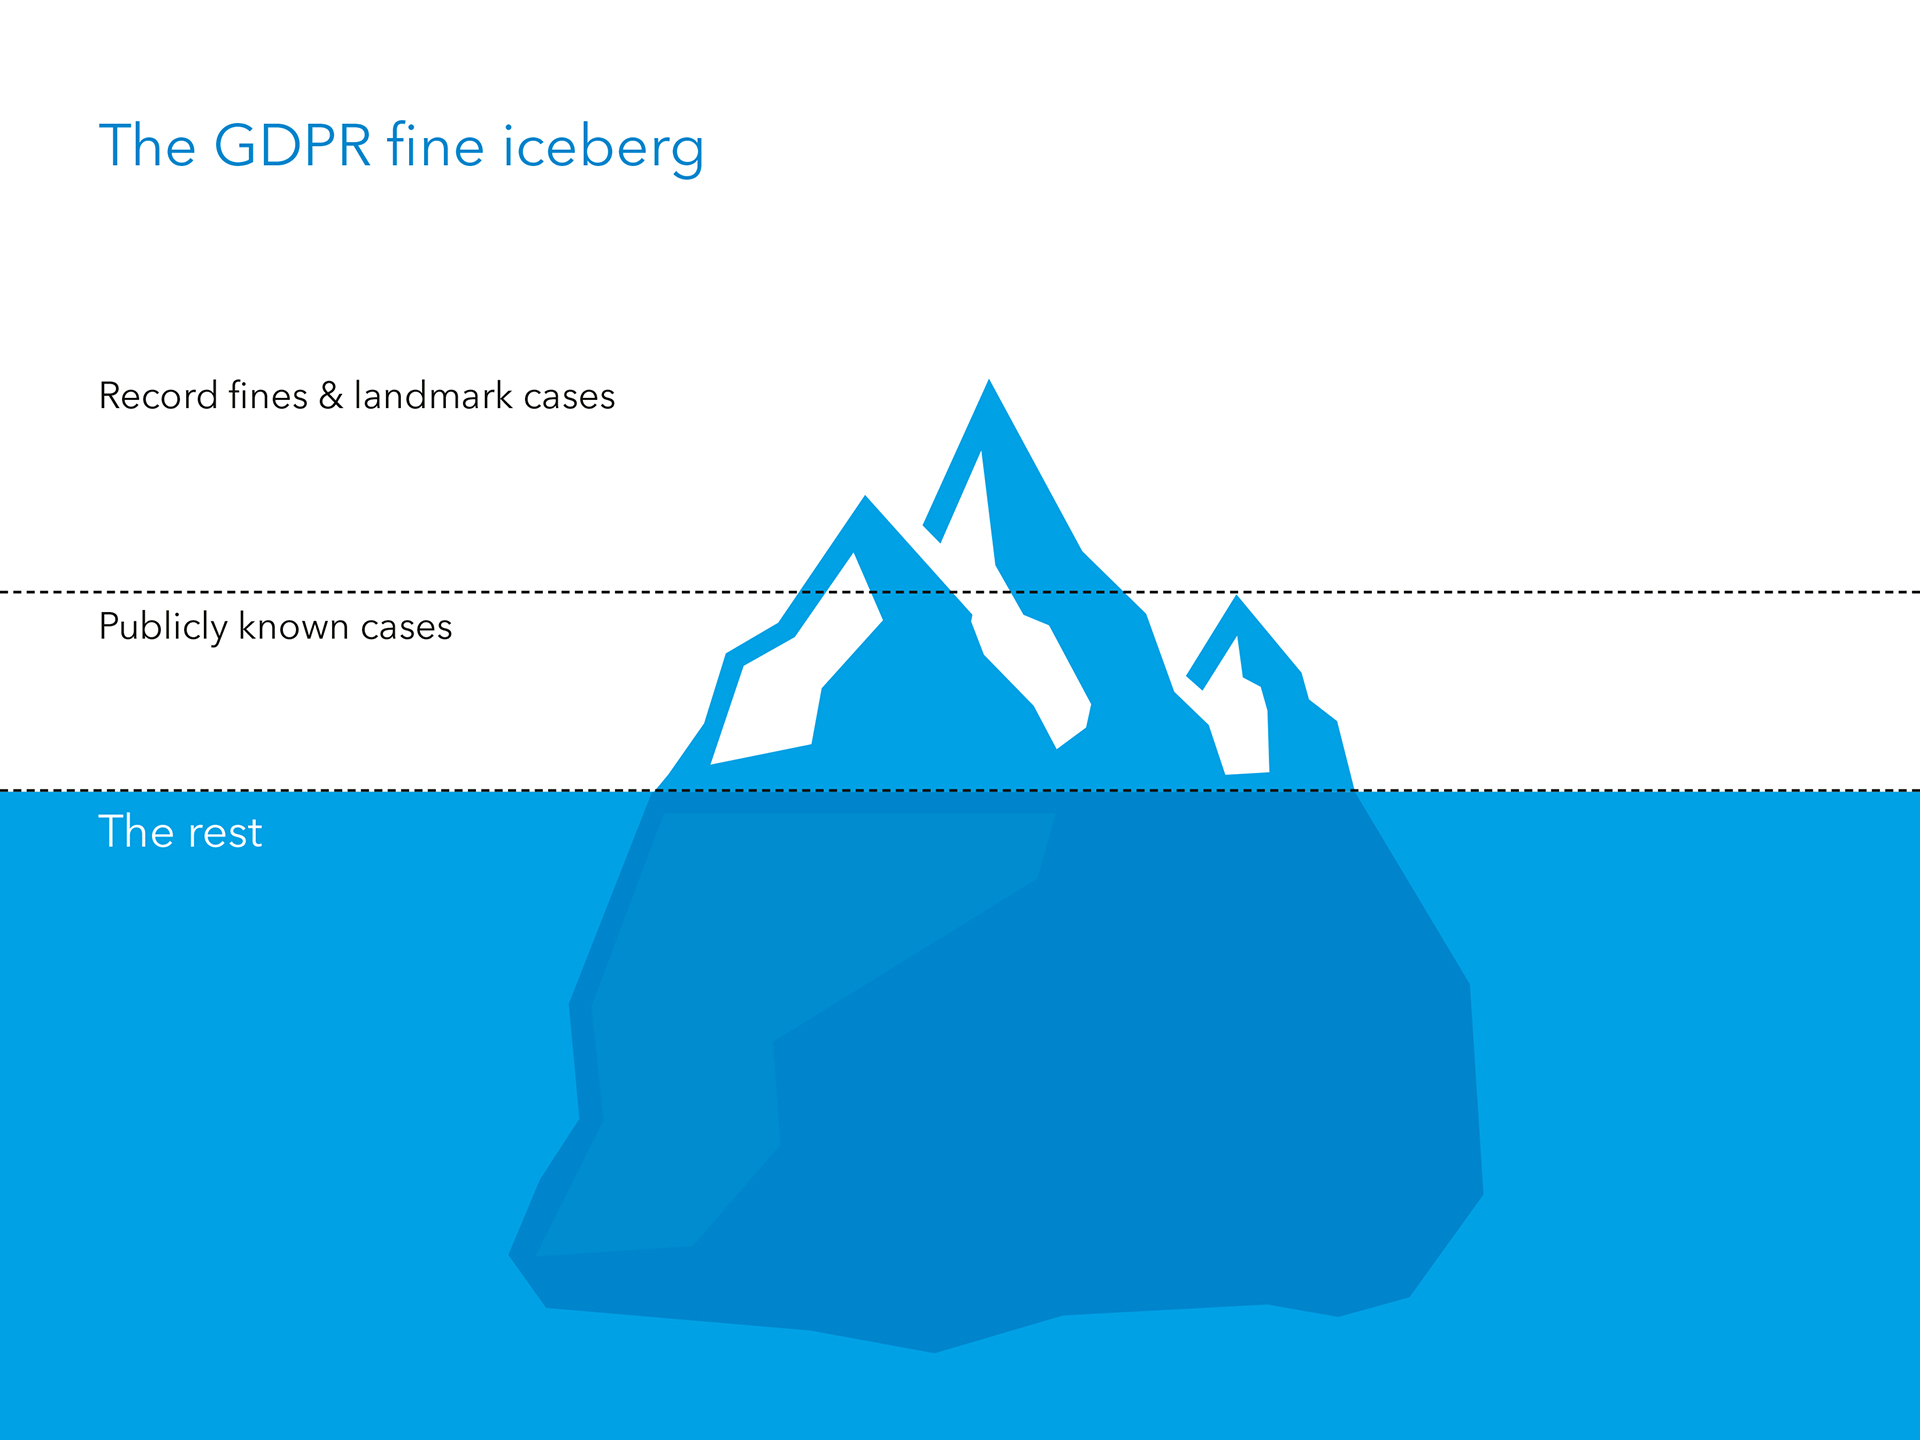 GDPR fine iceberg